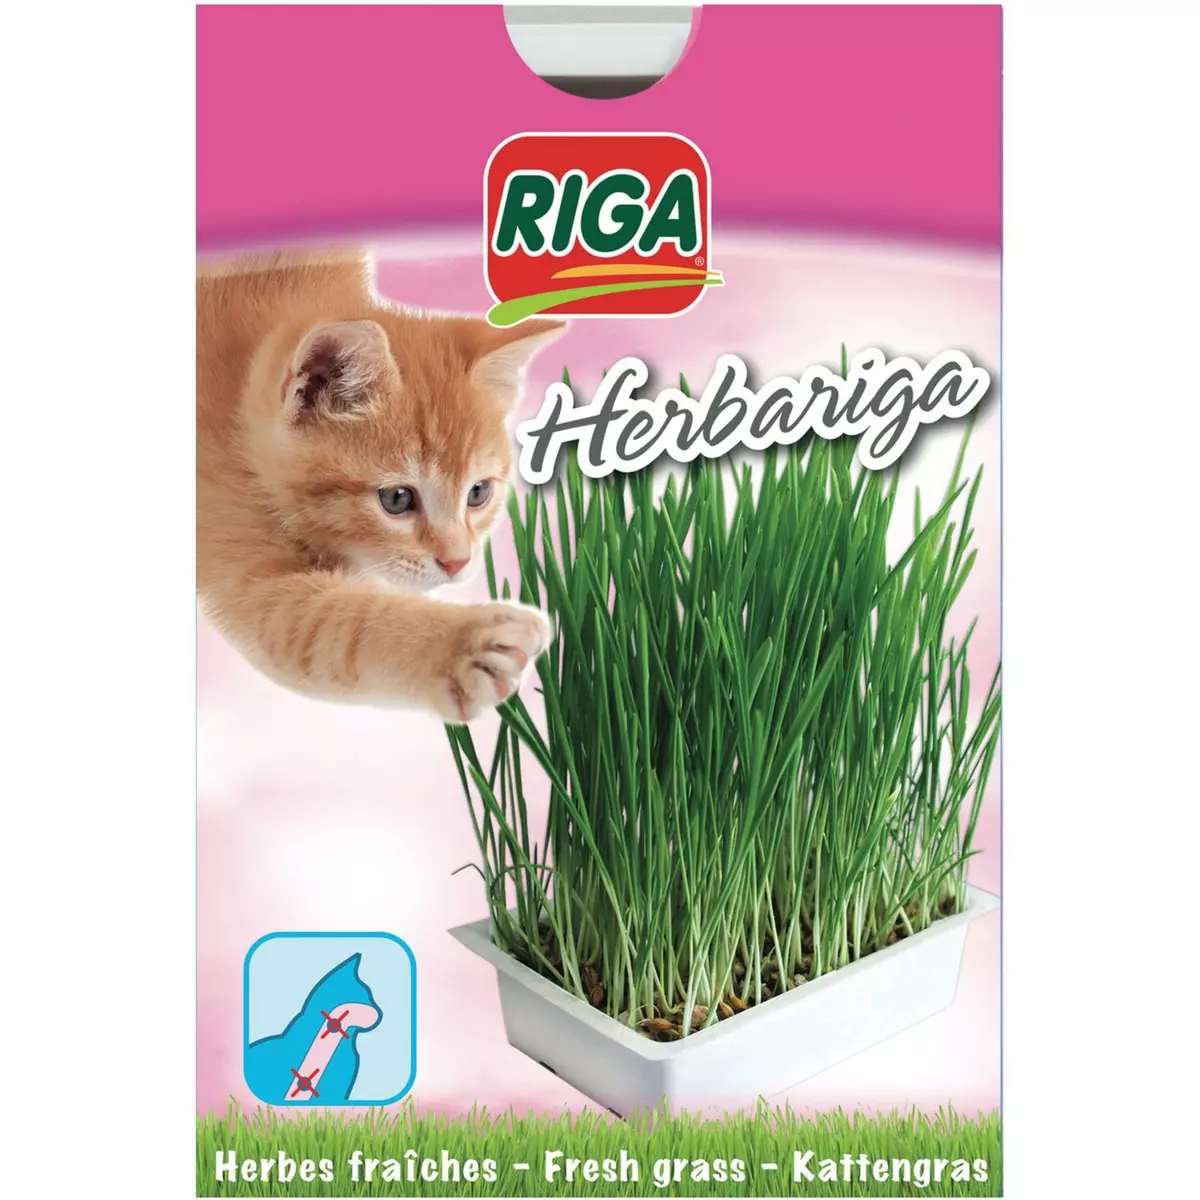 RIGA Herbariga herbes fraîches pour chat 1 pièce